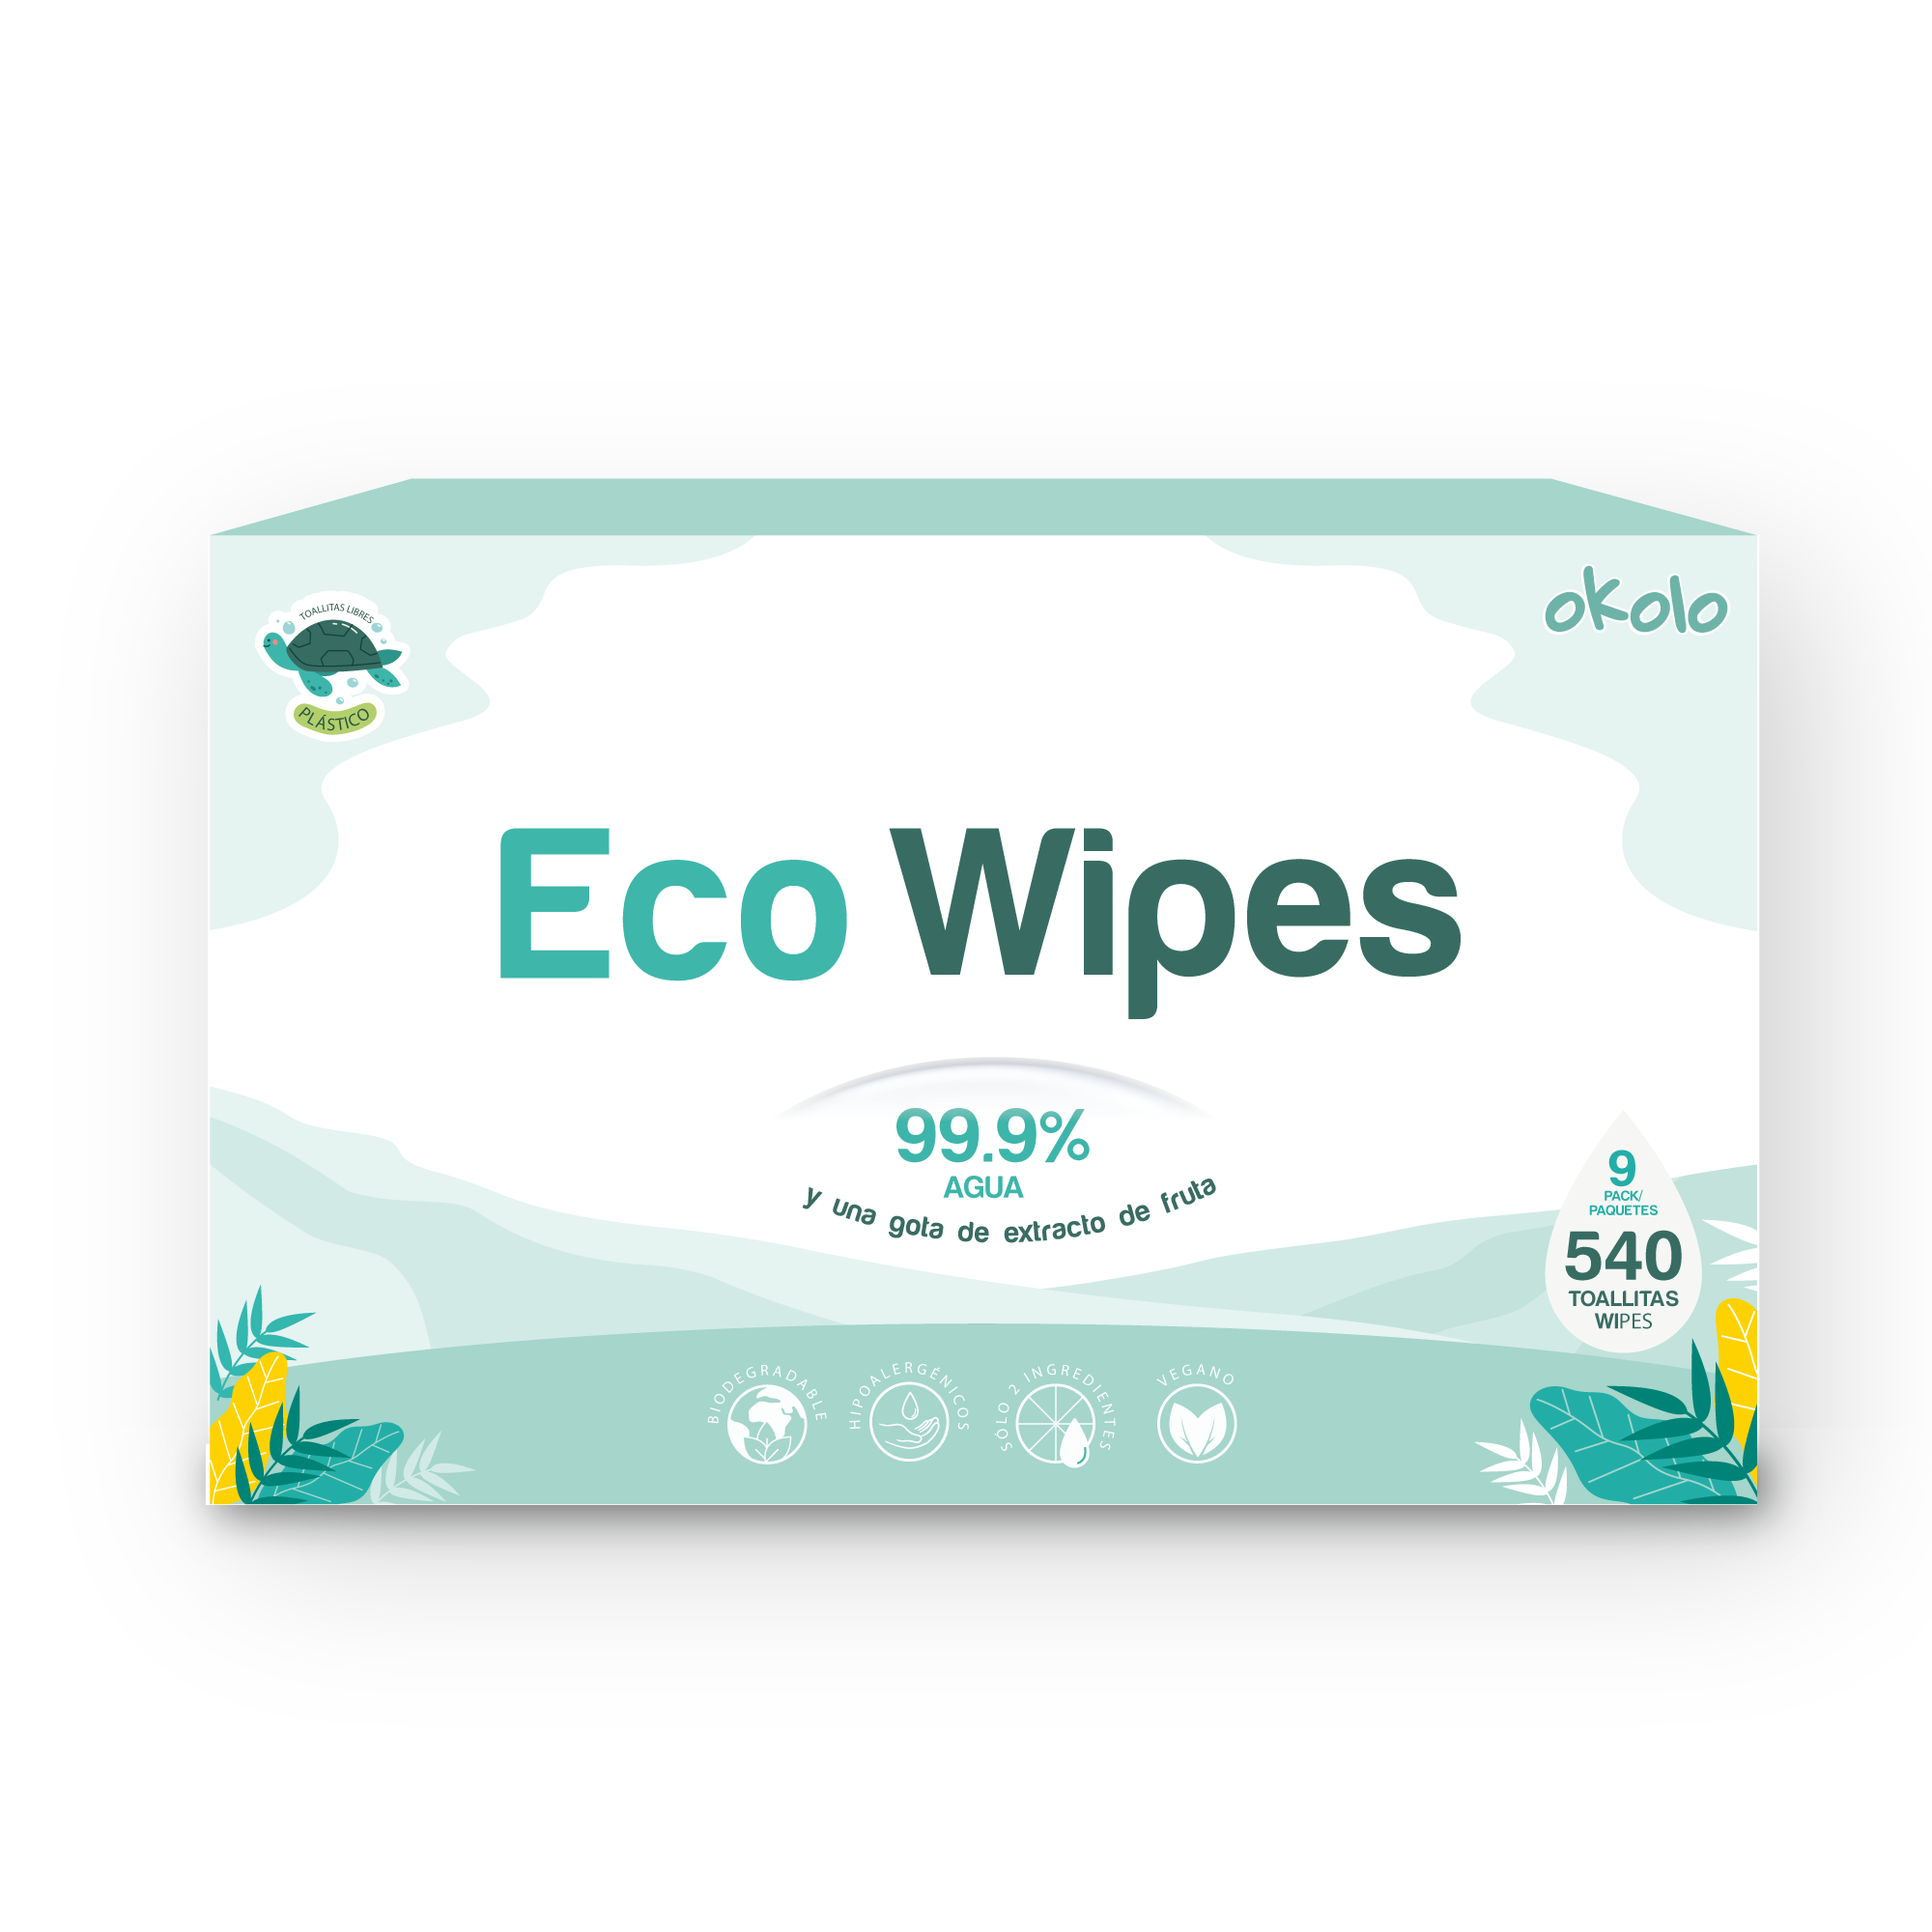 ECOWIPES PREVENTA | Pañitos Húmedos Ecológicos desde $218 cada Toallita, Biodegradables, Veganos, Libres de Plástico, Sin Fragancia Artificial